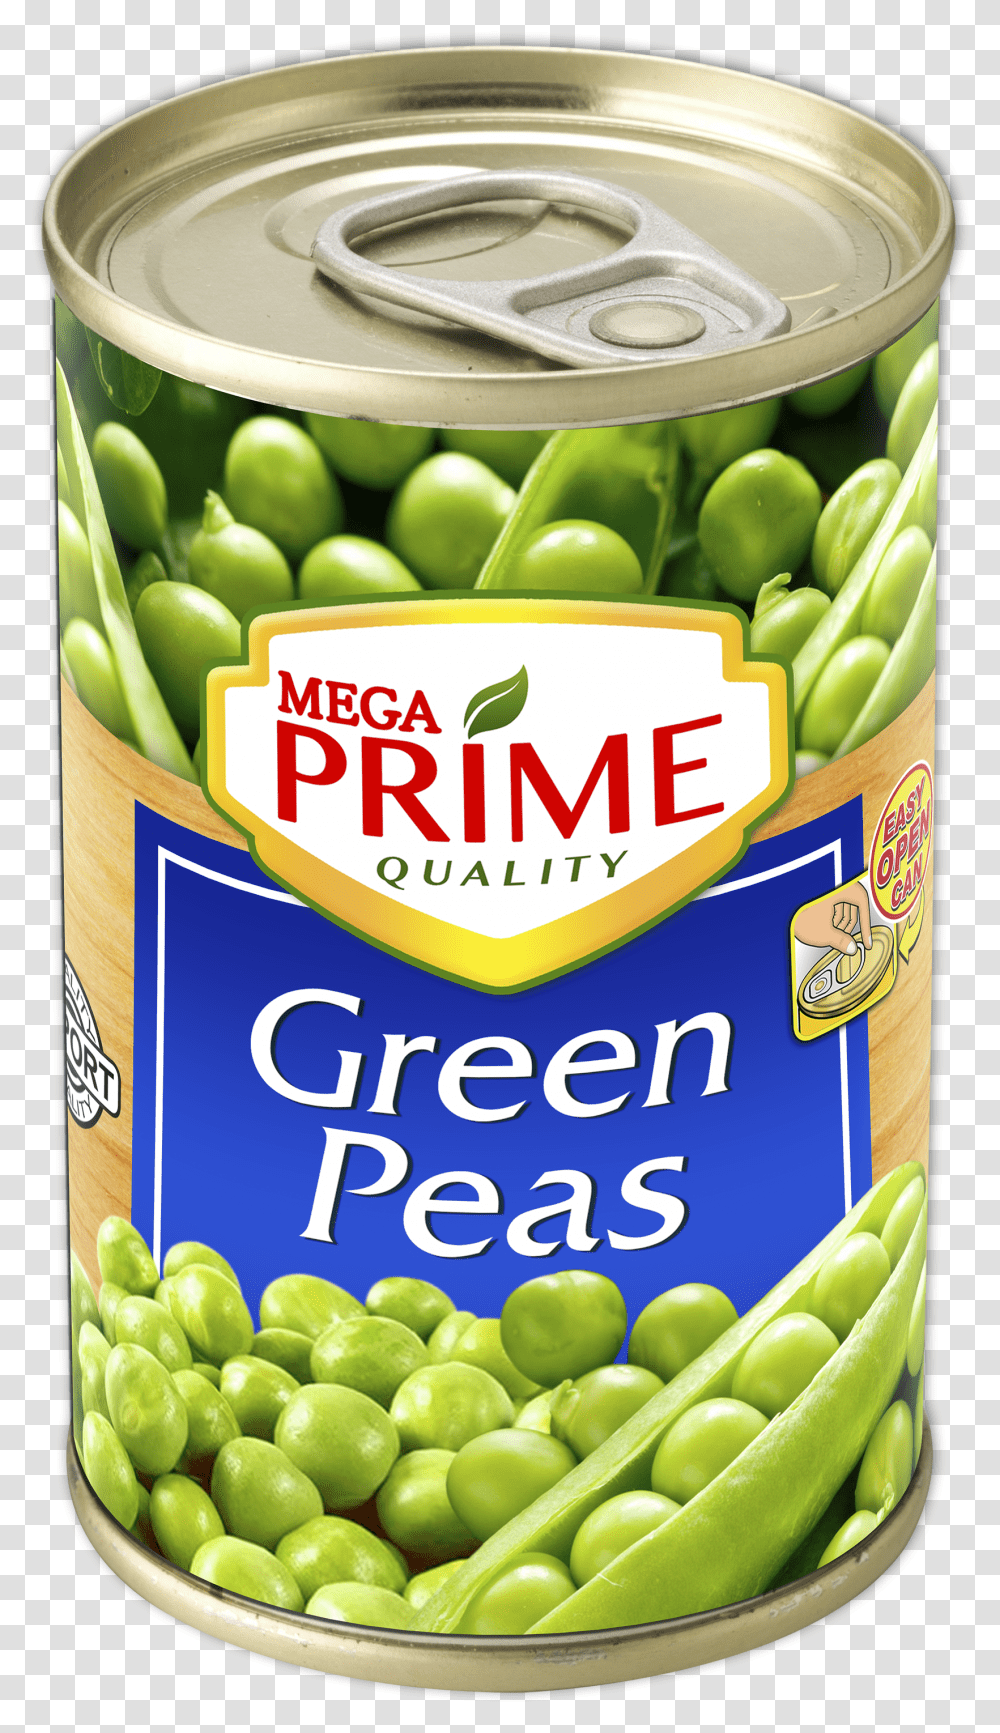 Prime Green Peas Mega Prime Green Peas Transparent Png